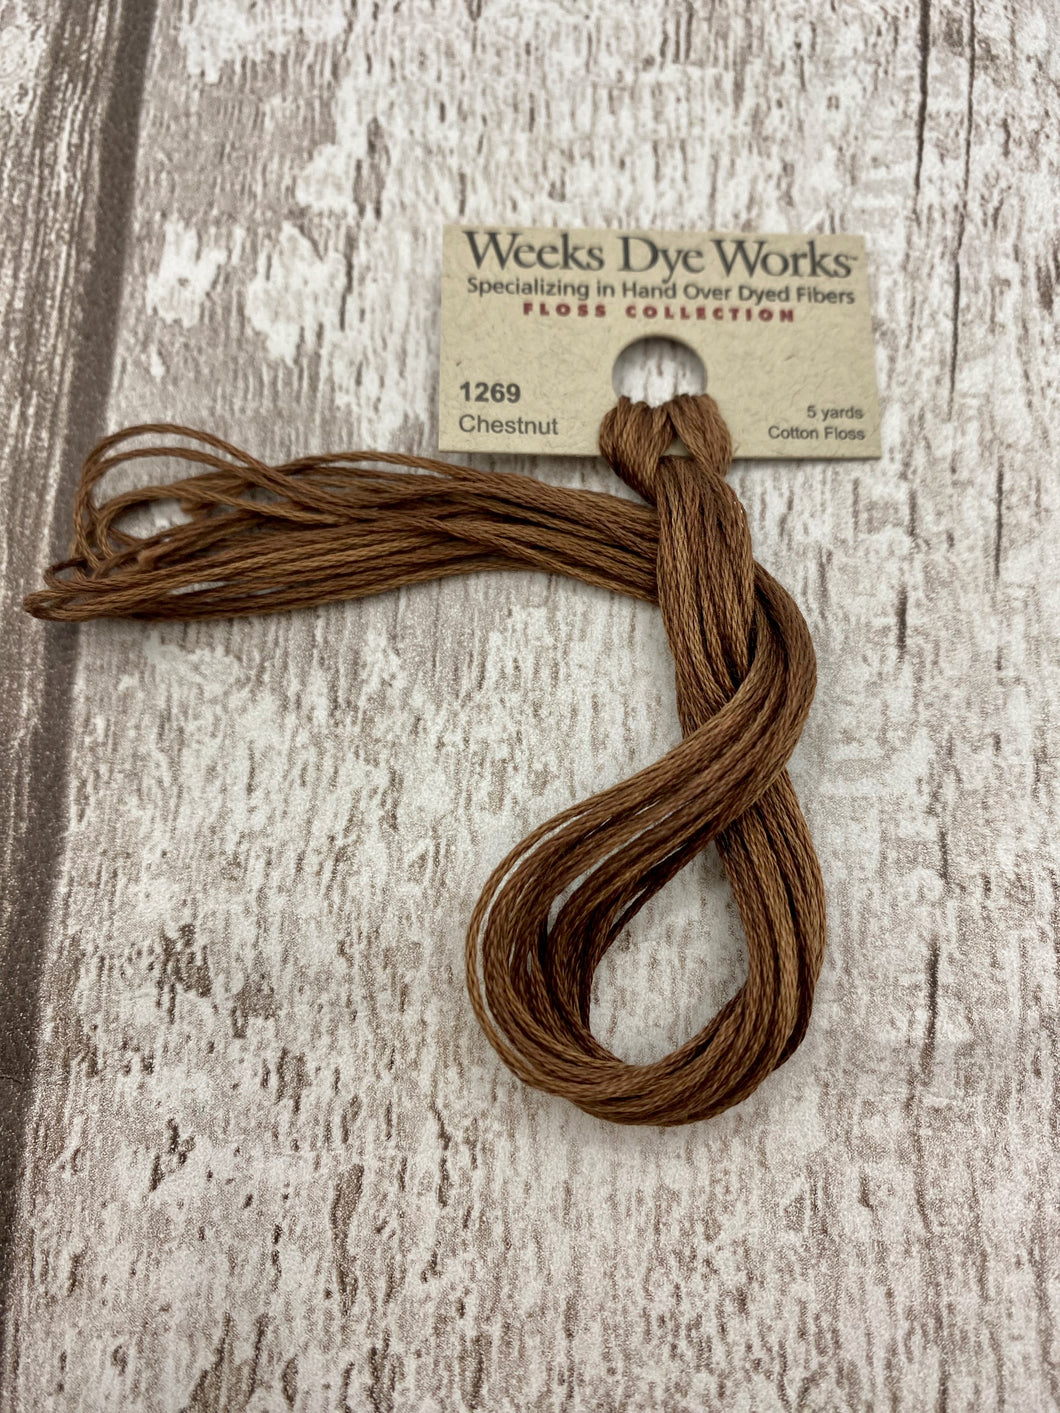 Chestnut (#1269) Weeks Dye Works 6-strand cotton floss